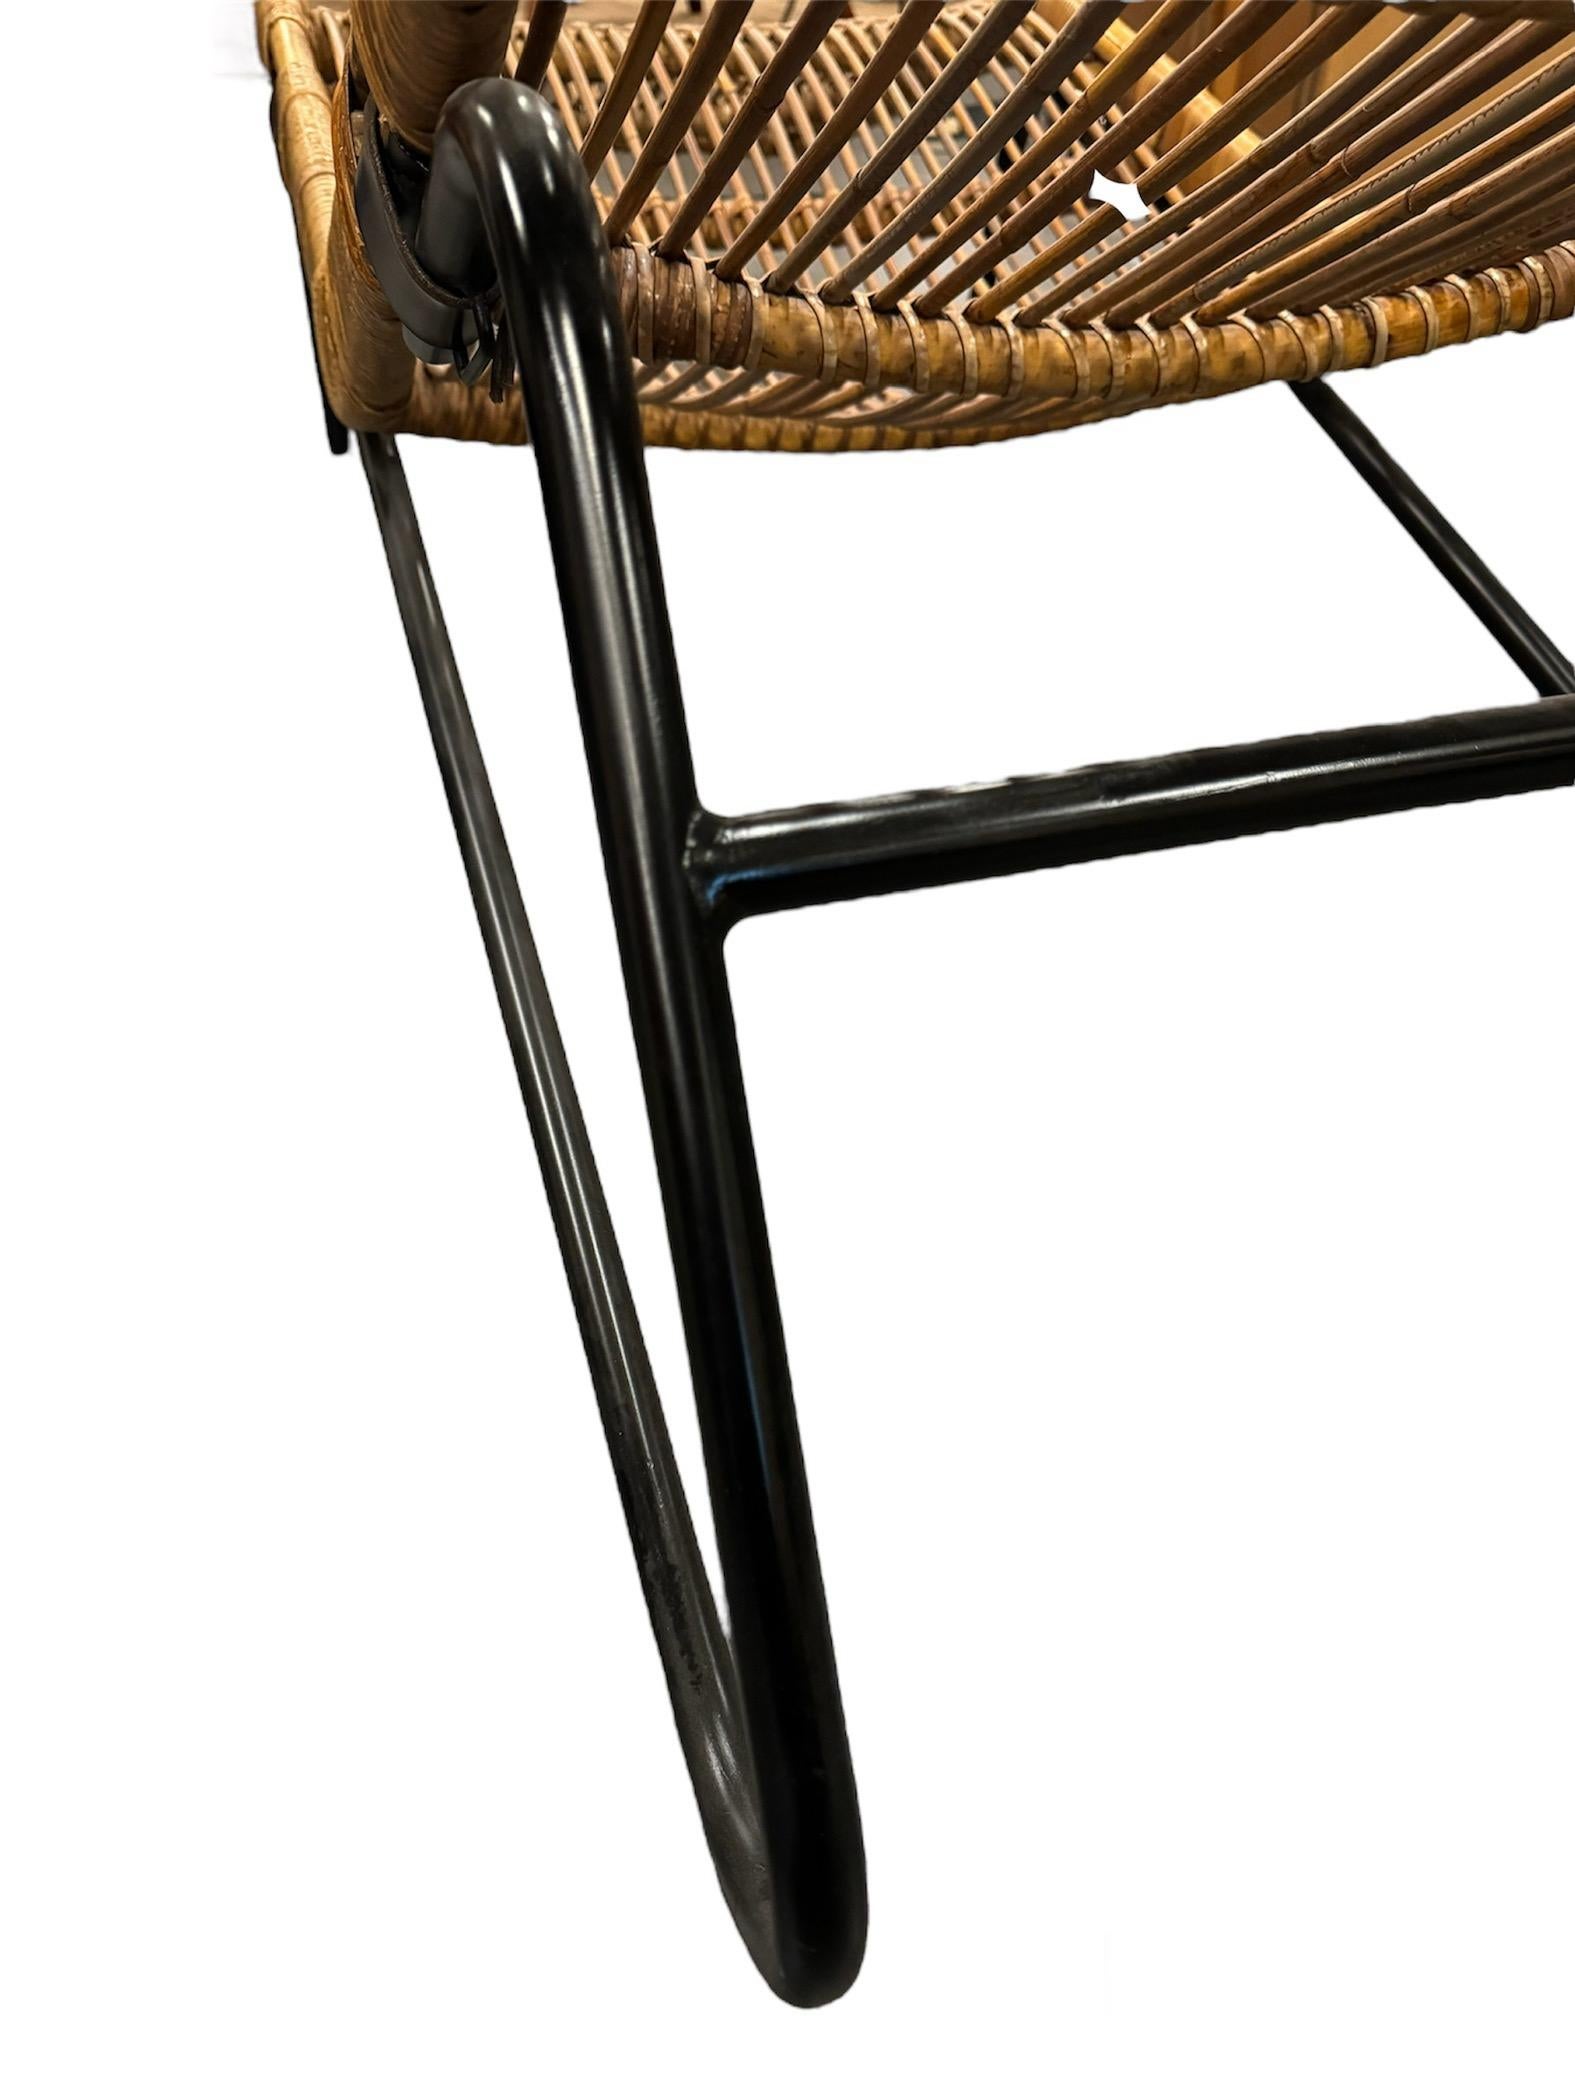 Wicker and metal  Lounge Chair by Dirk Van Sliedrecht Mid modern century  For Sale 4